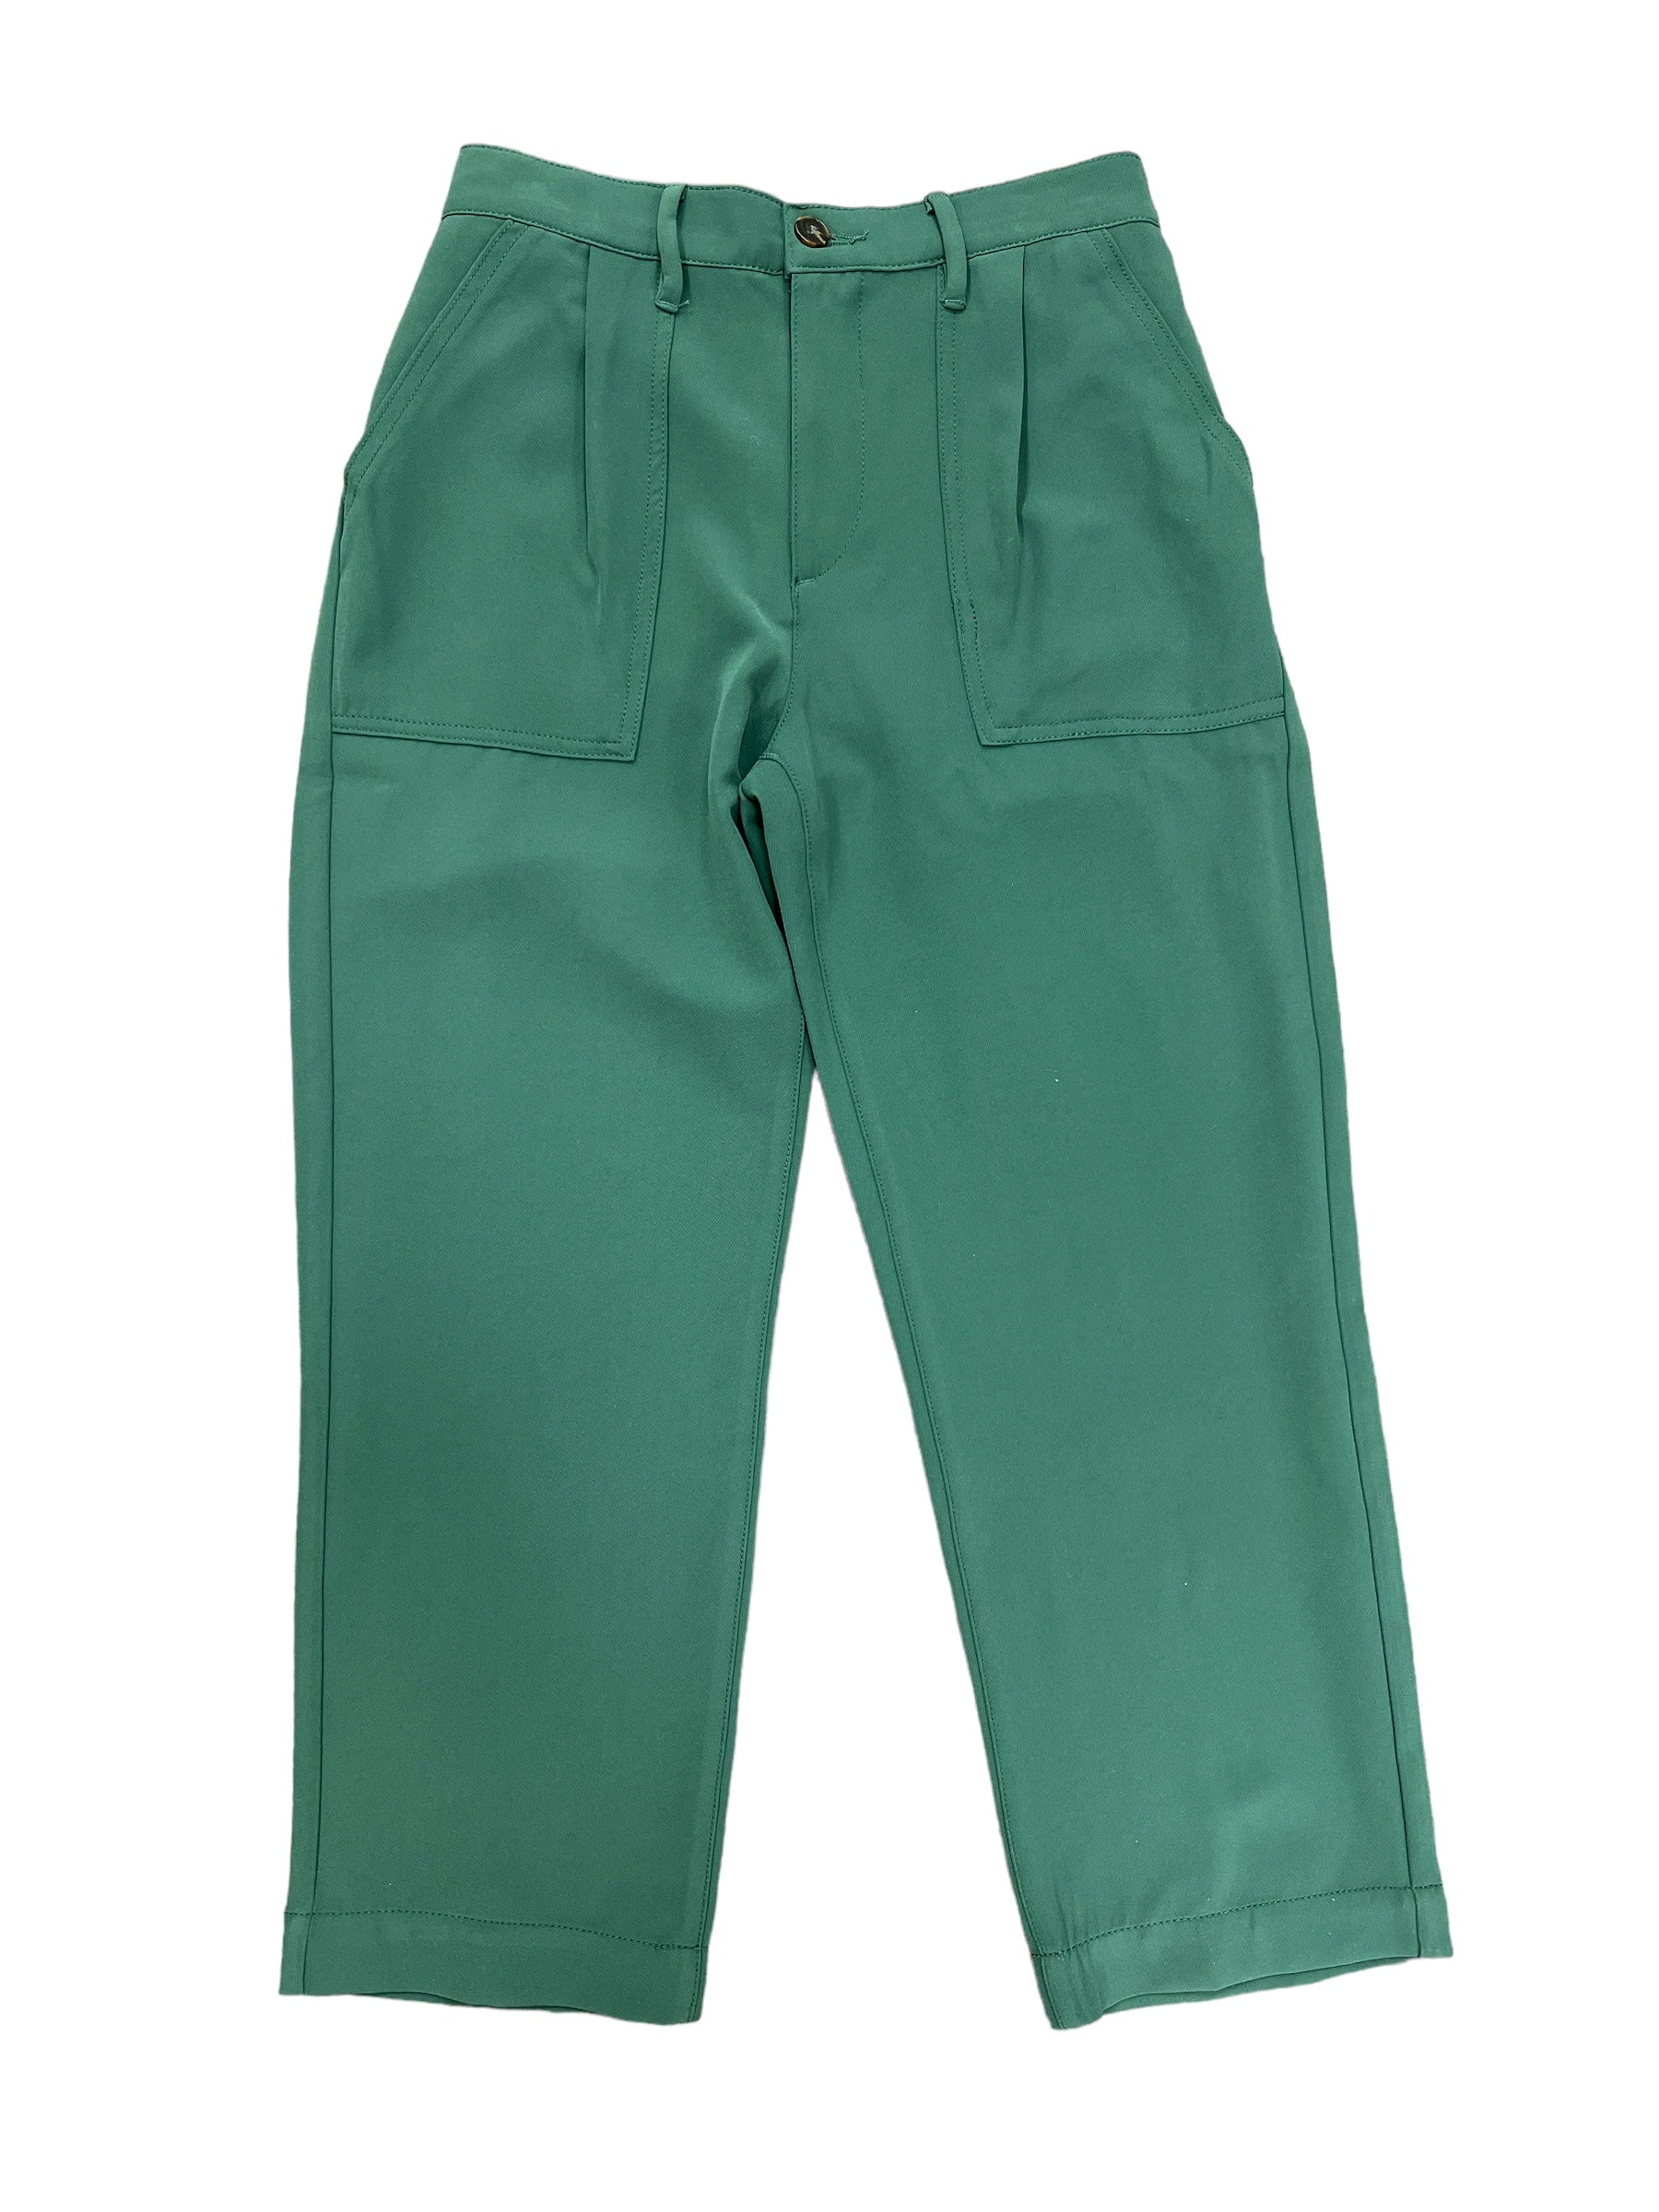 Cordova Pant-230 Pants-Simply Stylish Boutique-Simply Stylish Boutique | Women’s & Kid’s Fashion | Paducah, KY